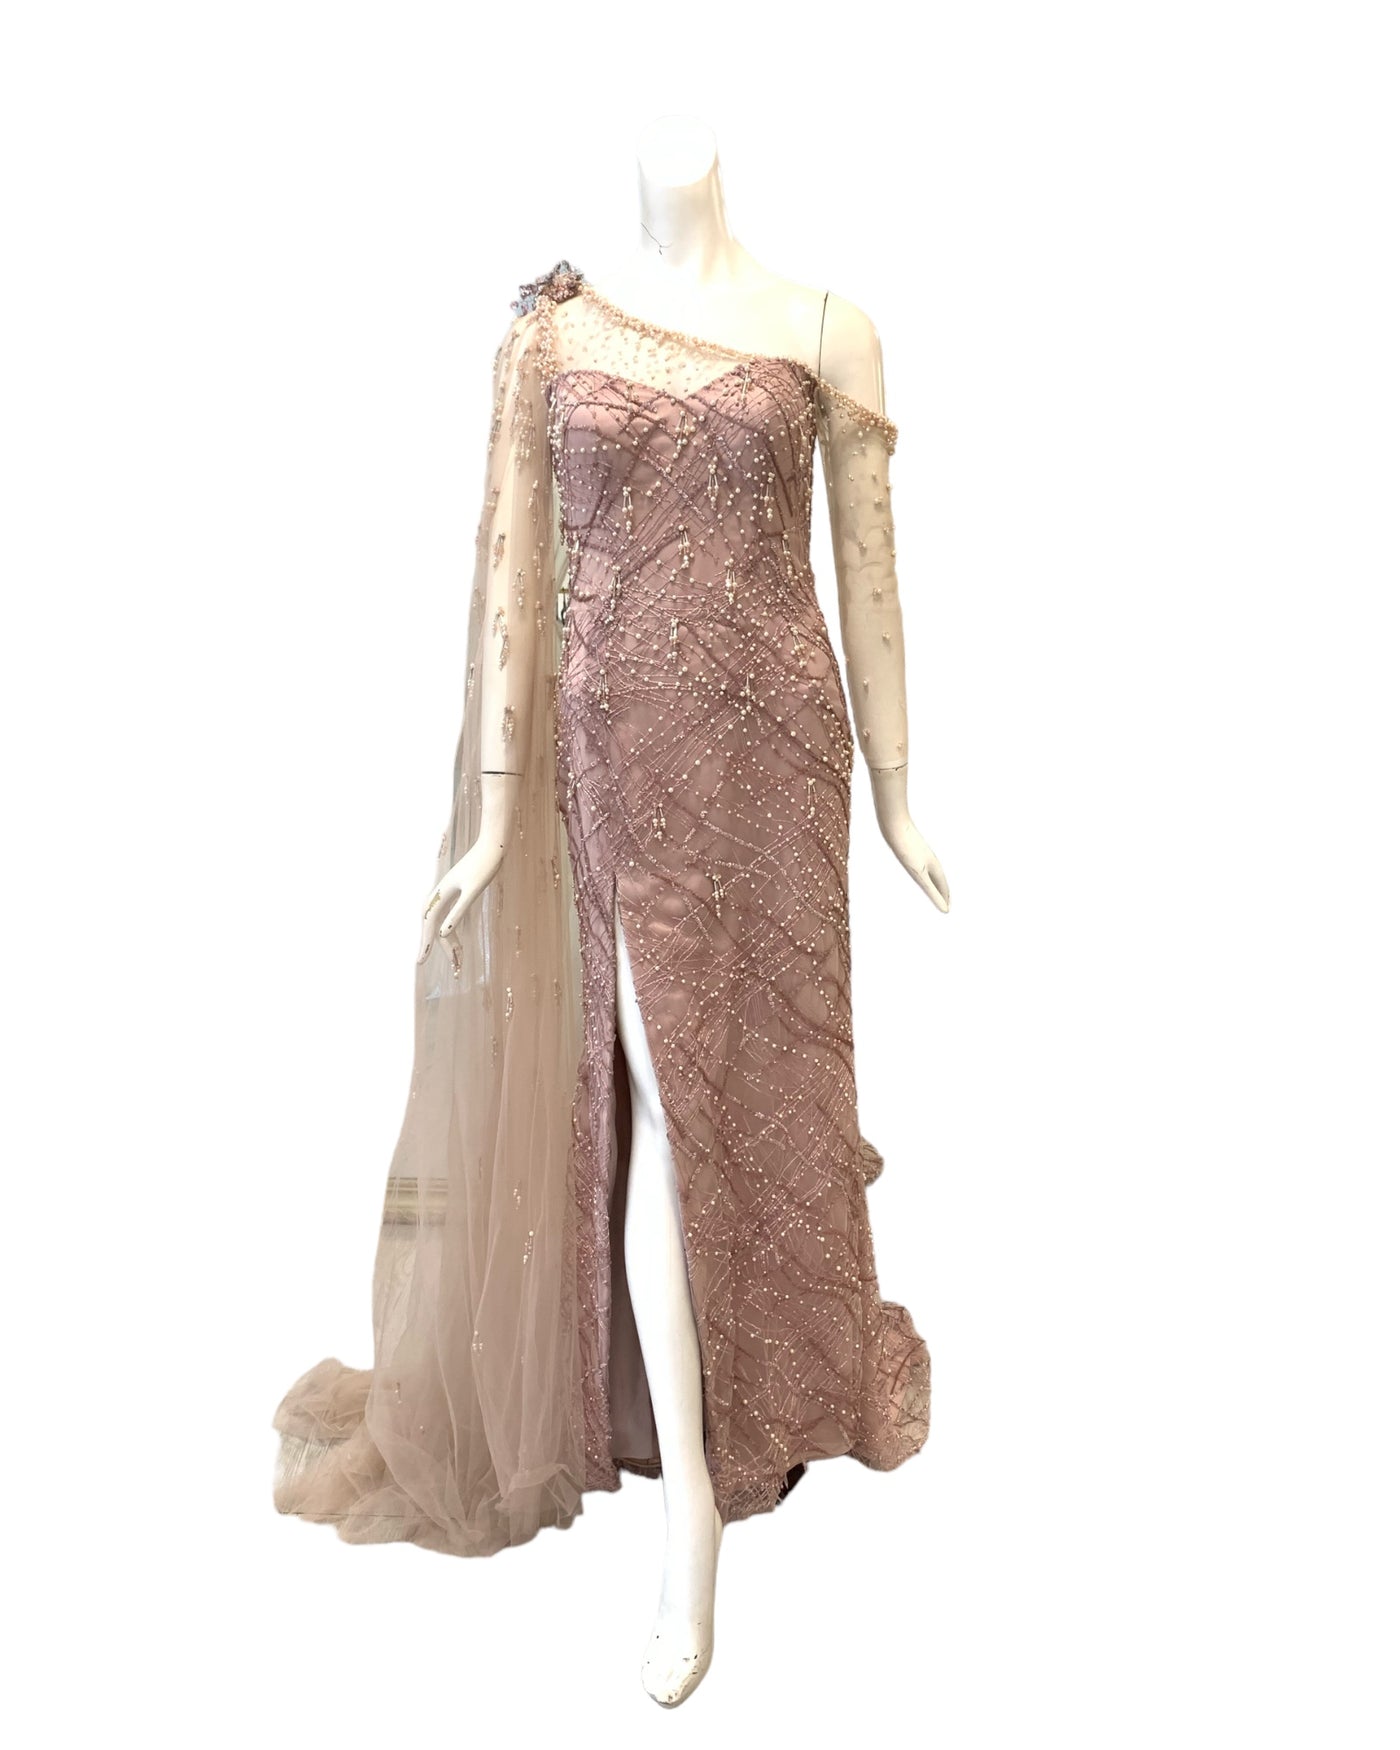 Buy : Winda Halomoan - Dusty Pink One Shoulder Gown